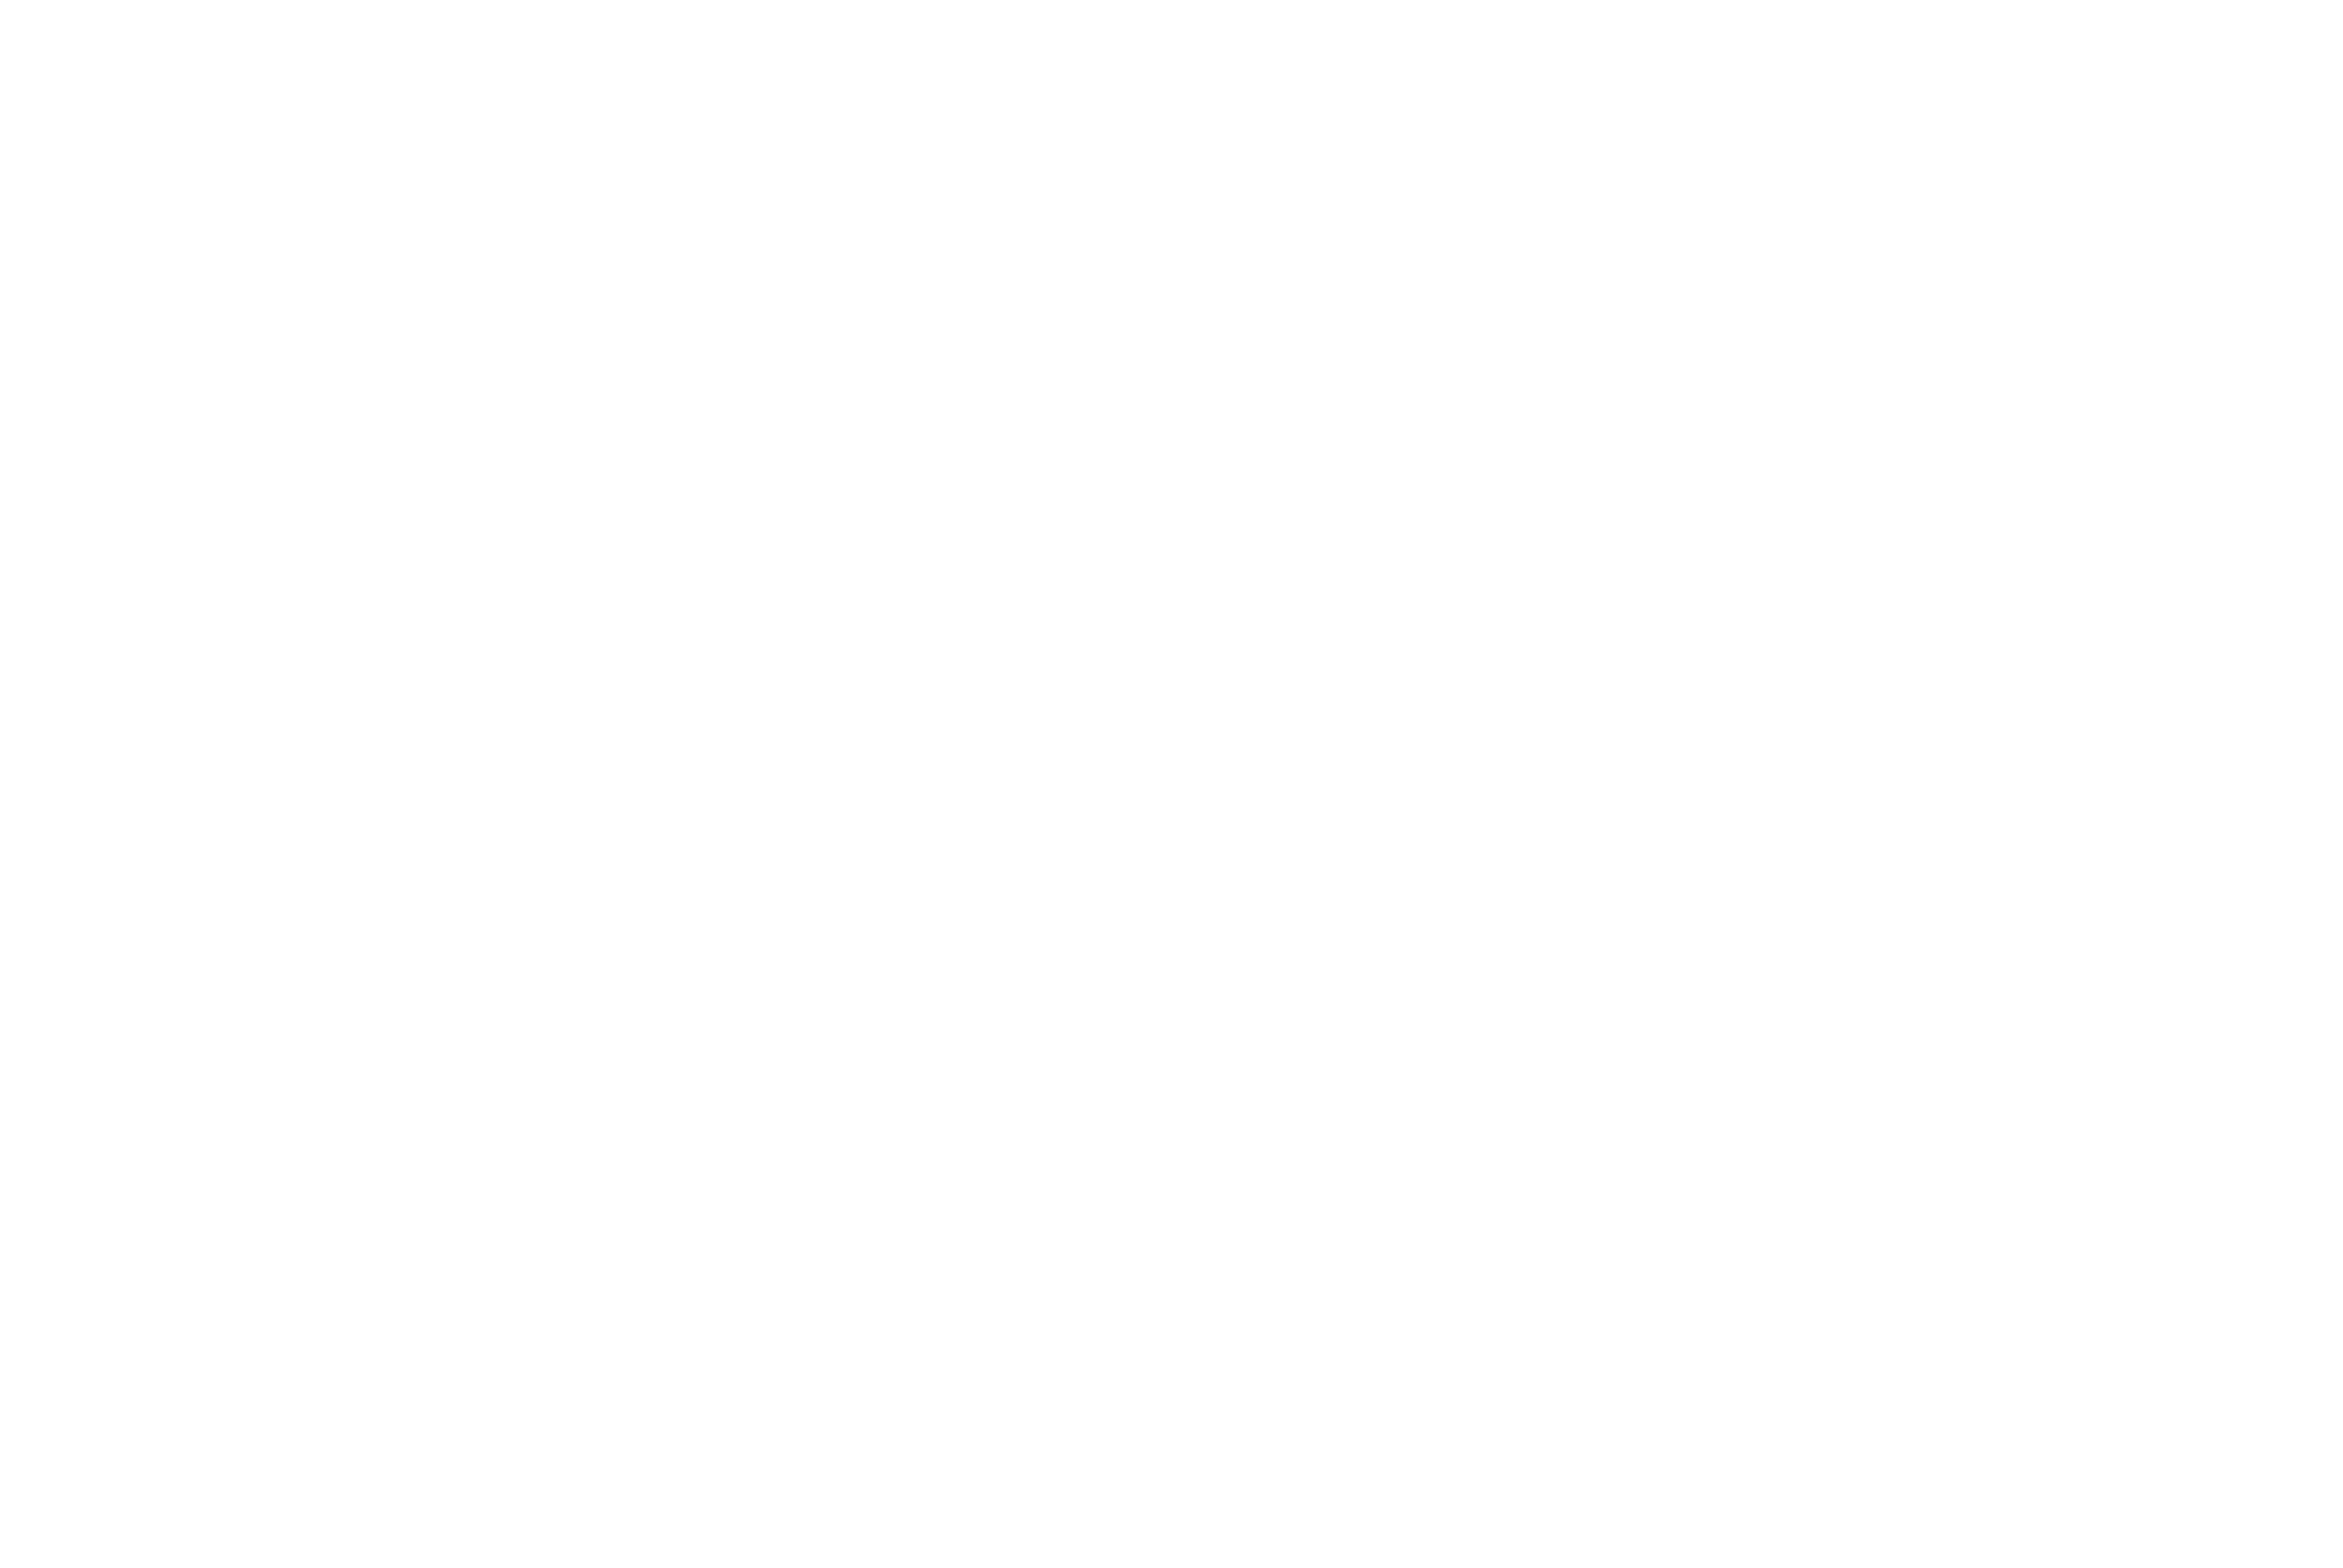 Dragon Mall UK